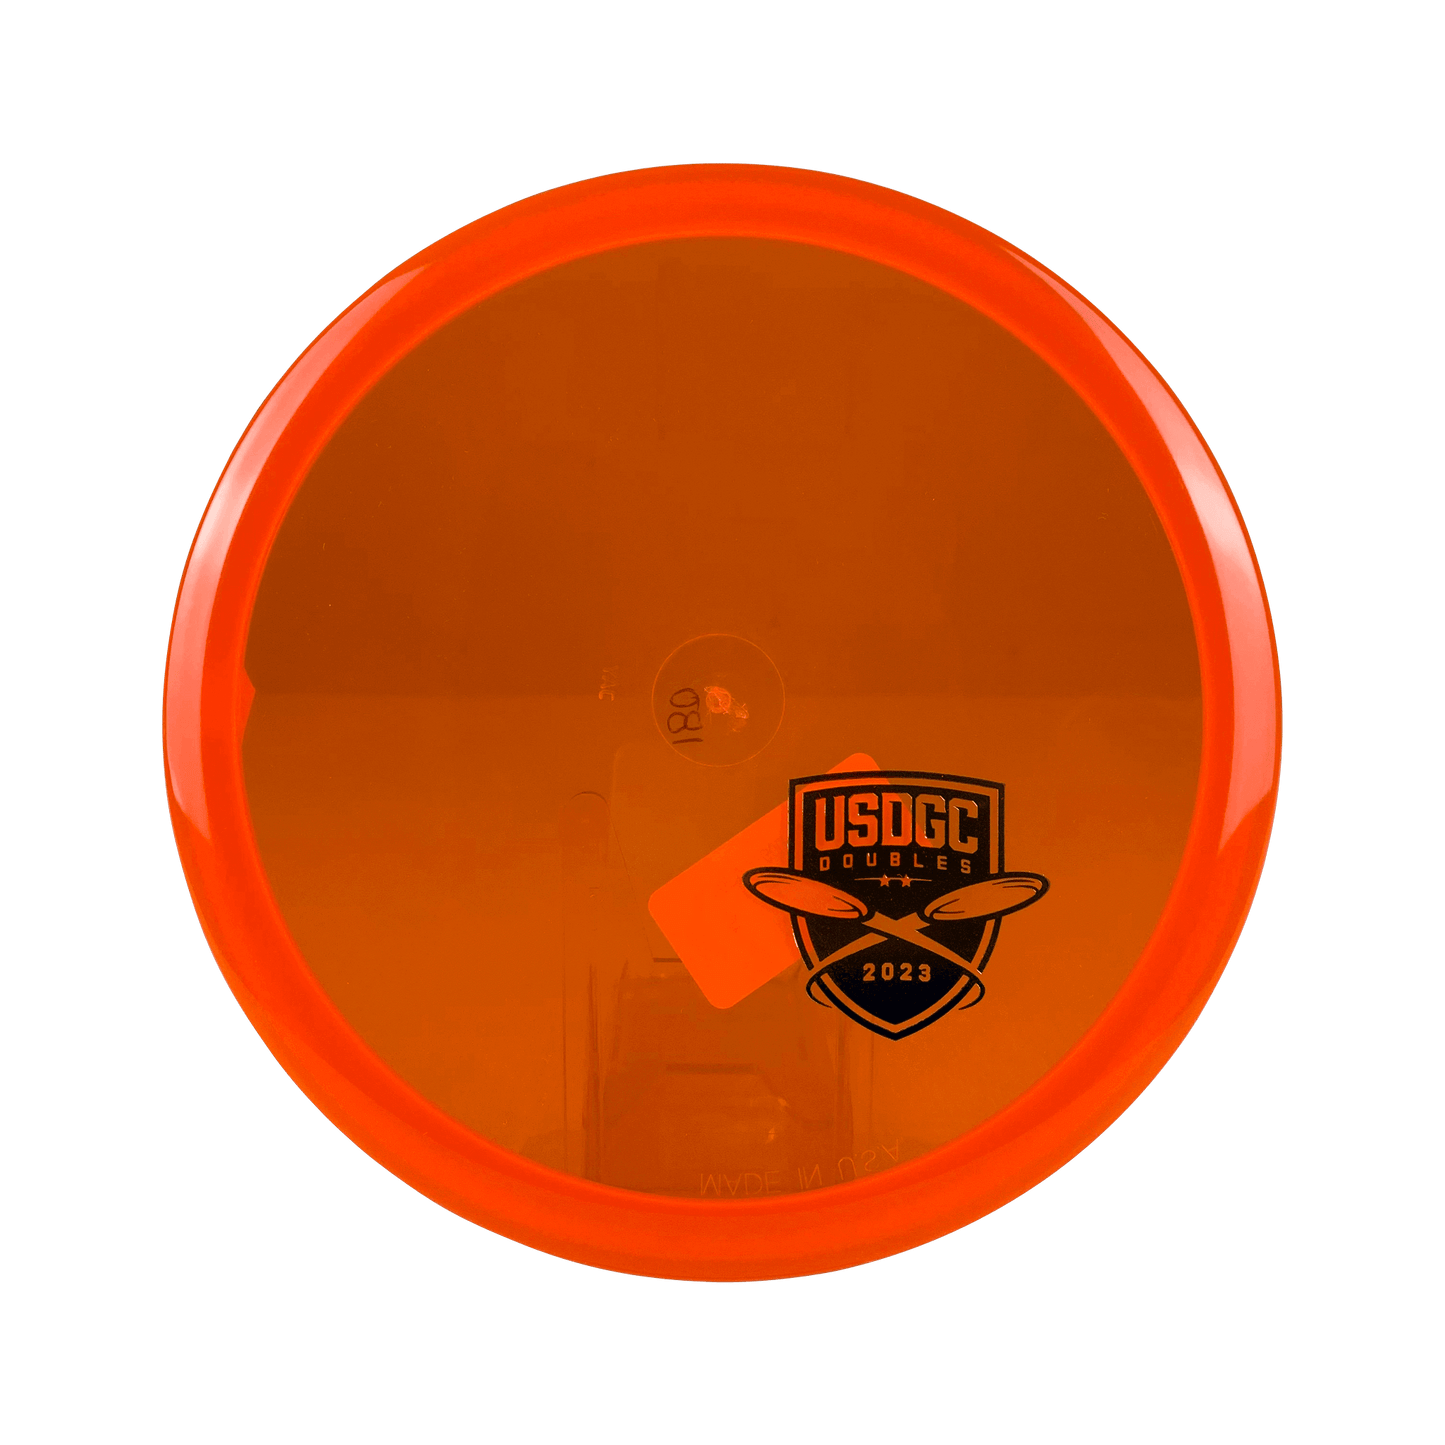 Champion Jay - USDGC Doubles Disc Innova orange 180 